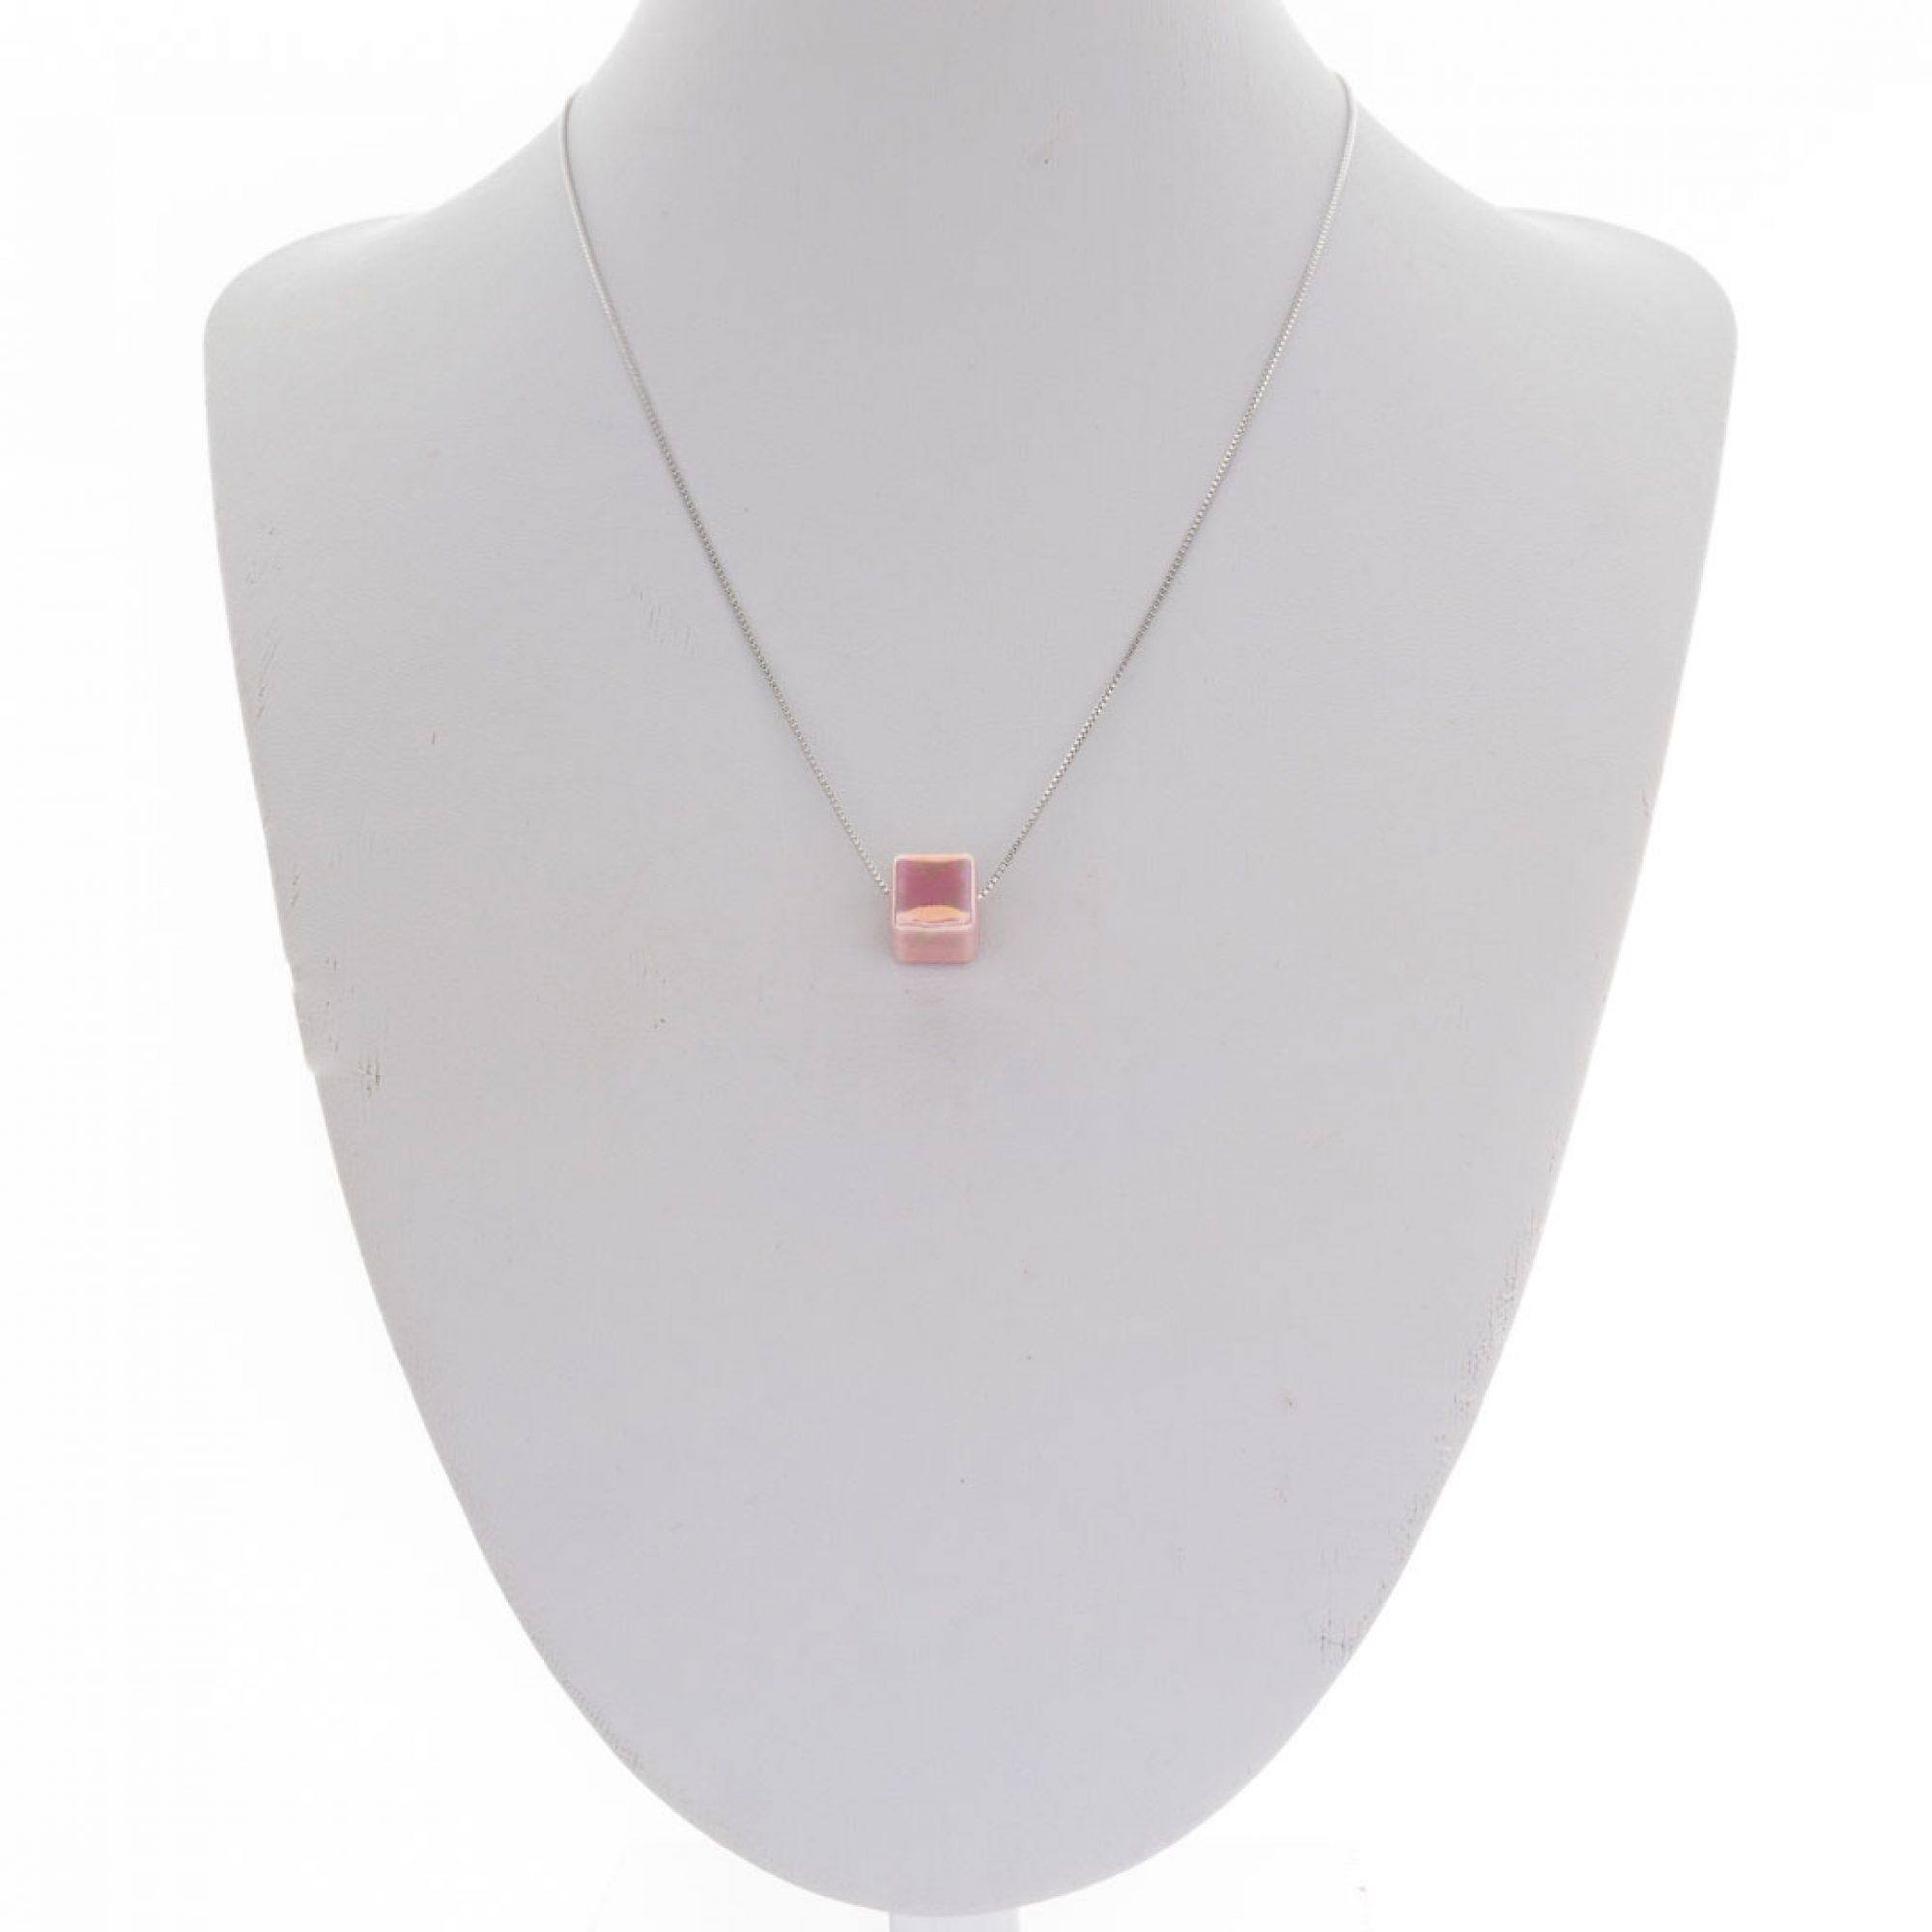 Metallic pink bead necklace